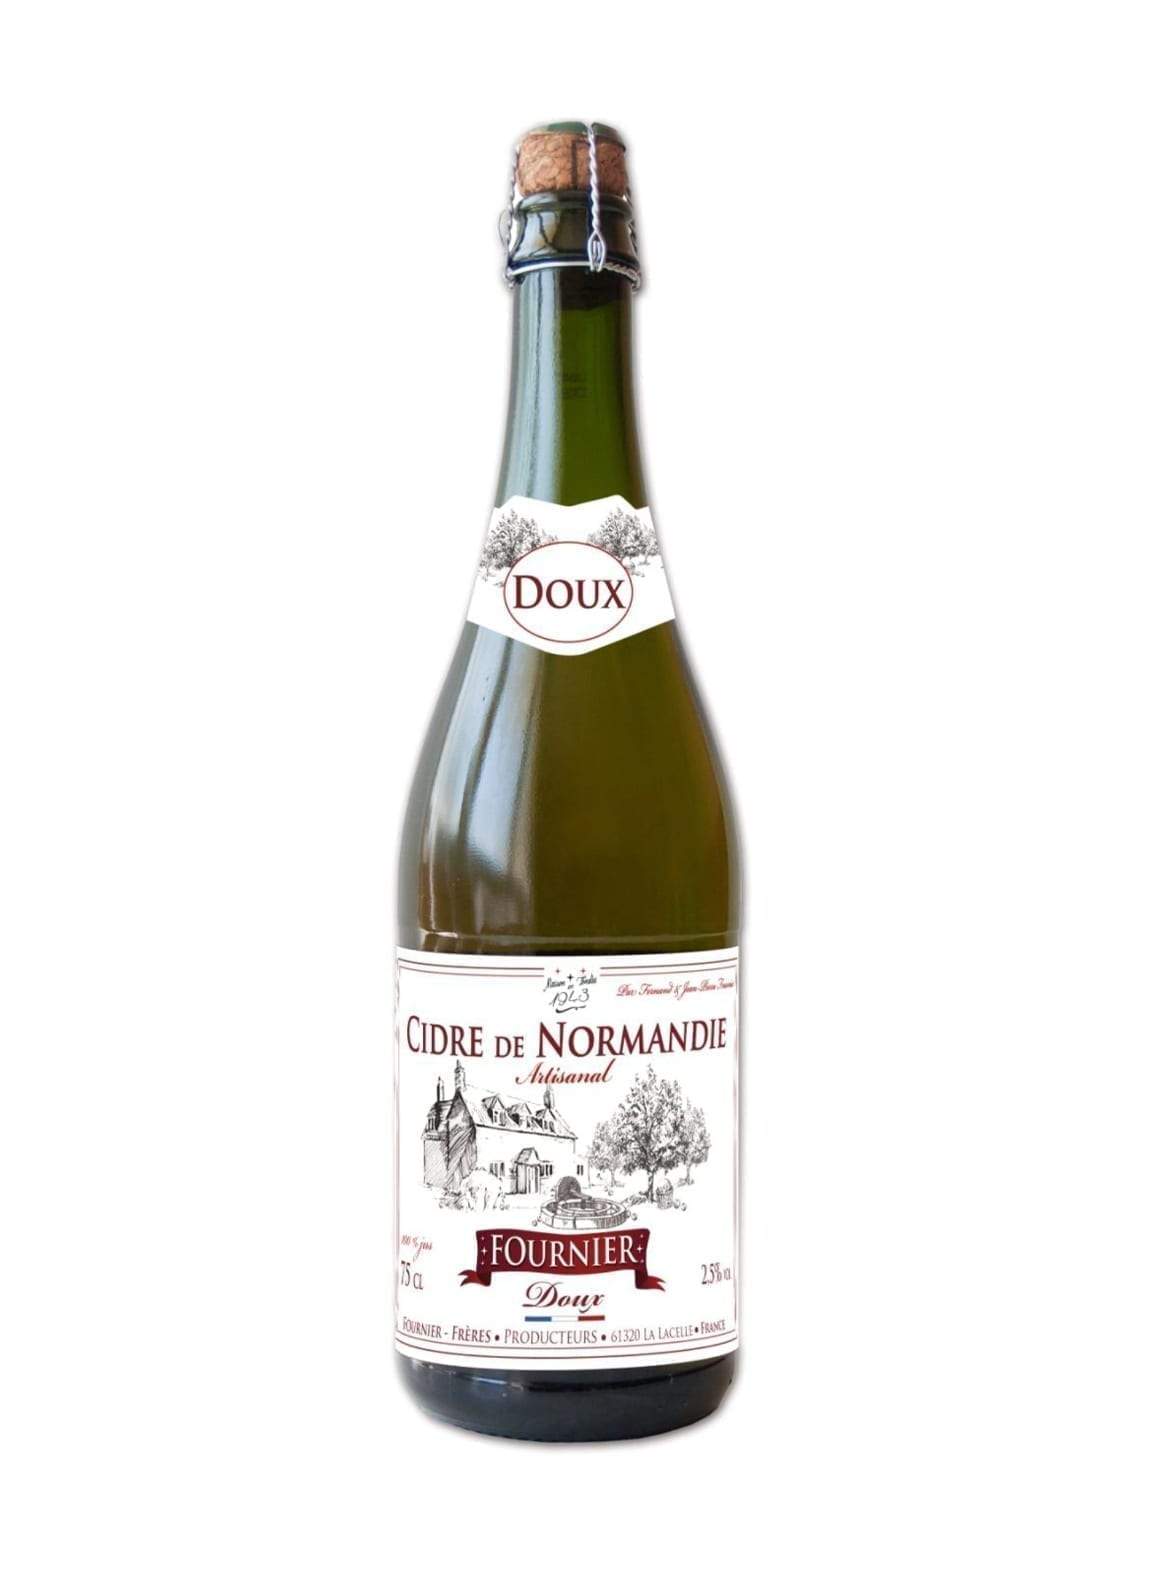 Fournier Doux Cidre de Normandie sweet apple cider) Artisanal 2.5% 750ml | Hard Cider | Shop online at Spirits of France